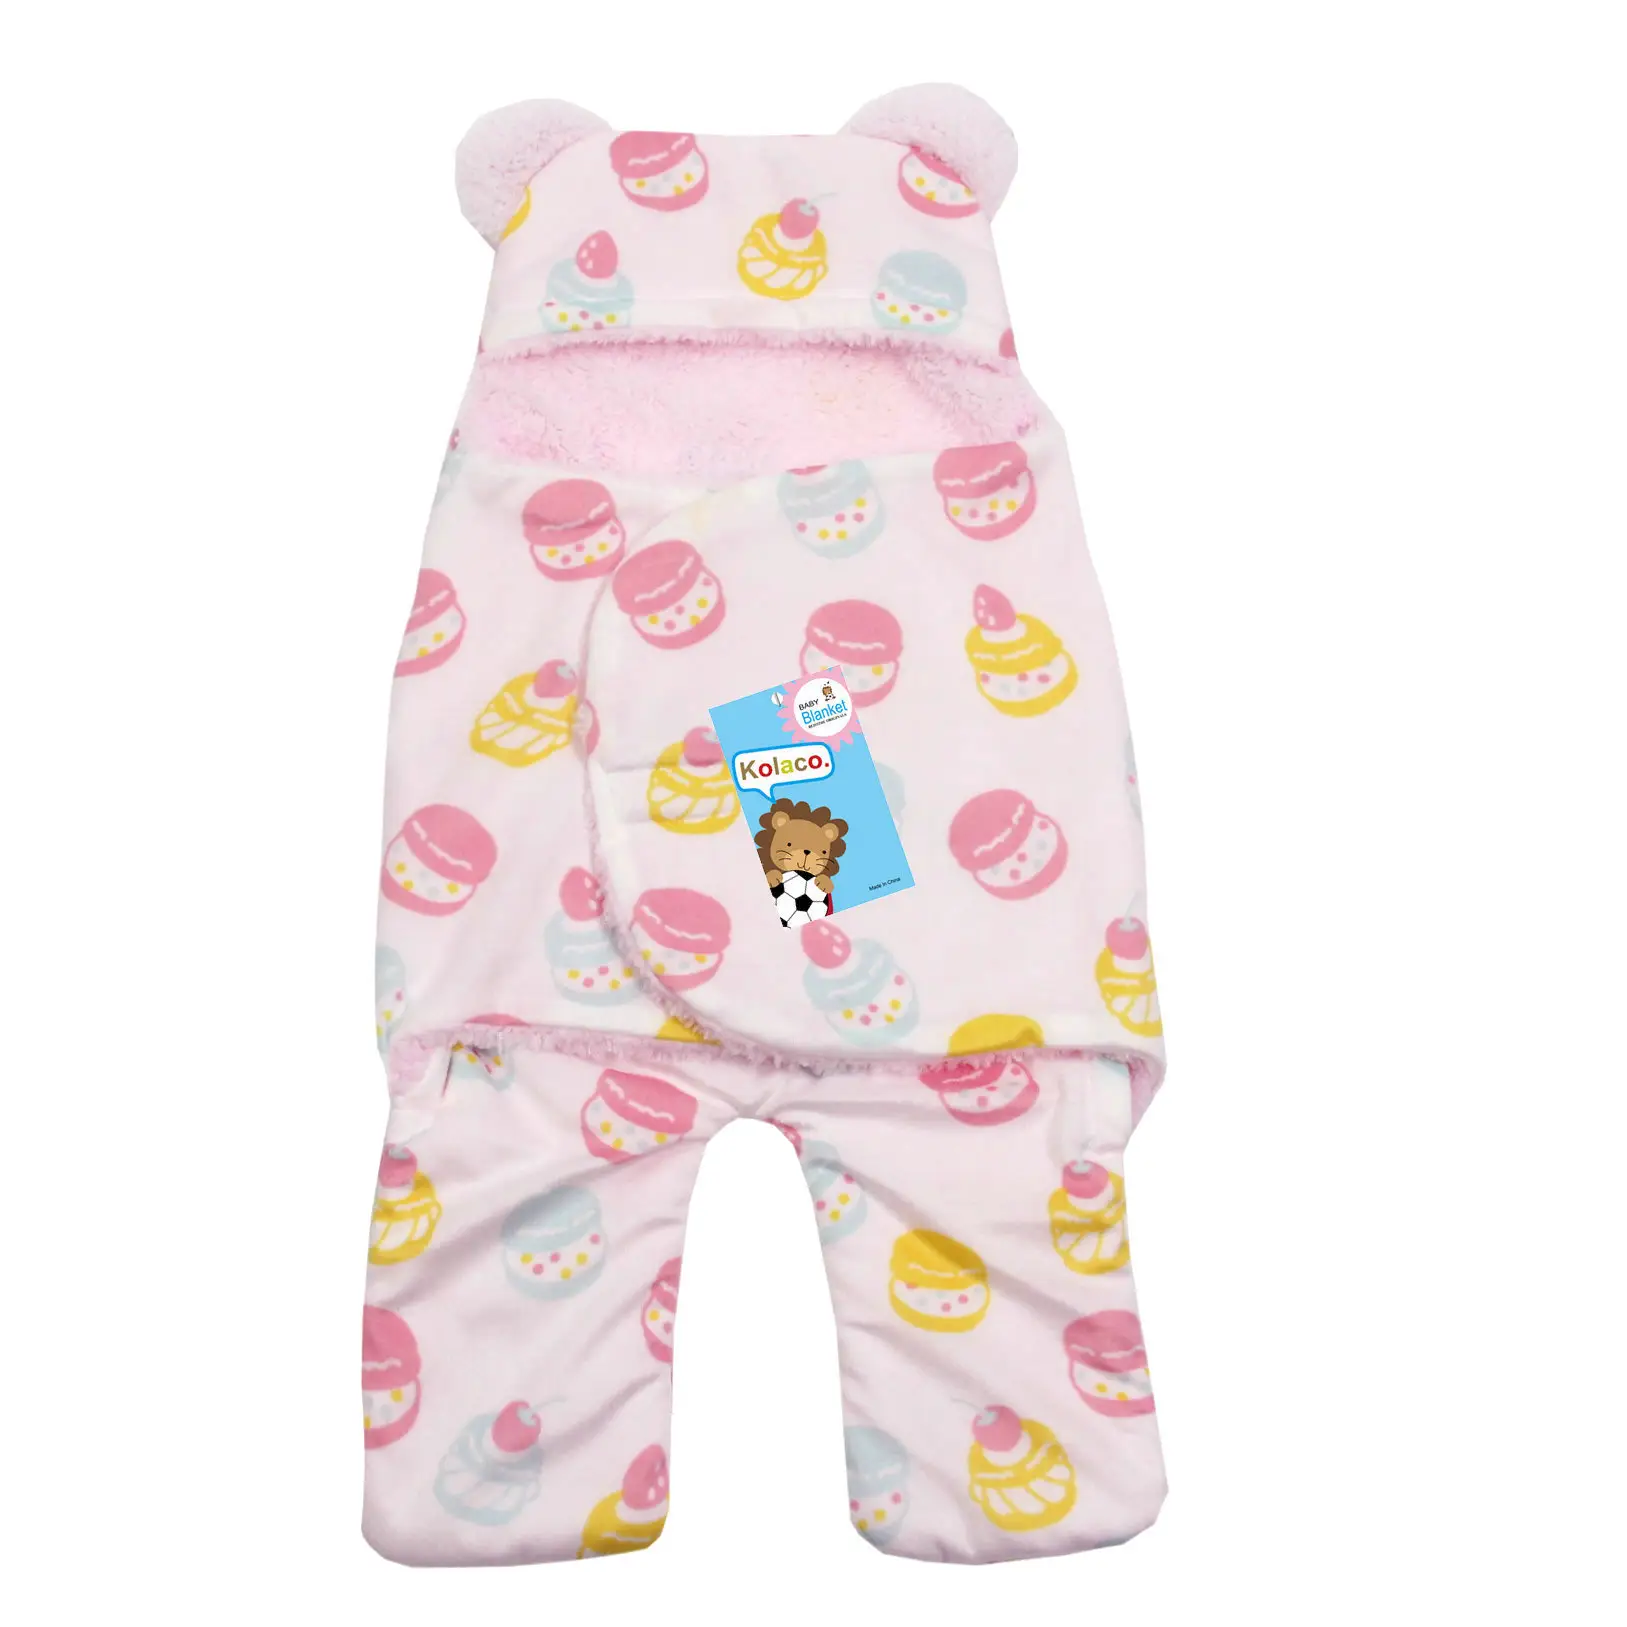 Baby Products Newborn Baby sleep sack Soft Infant bear shaped plush Sleeping Bag Stroller Wrap